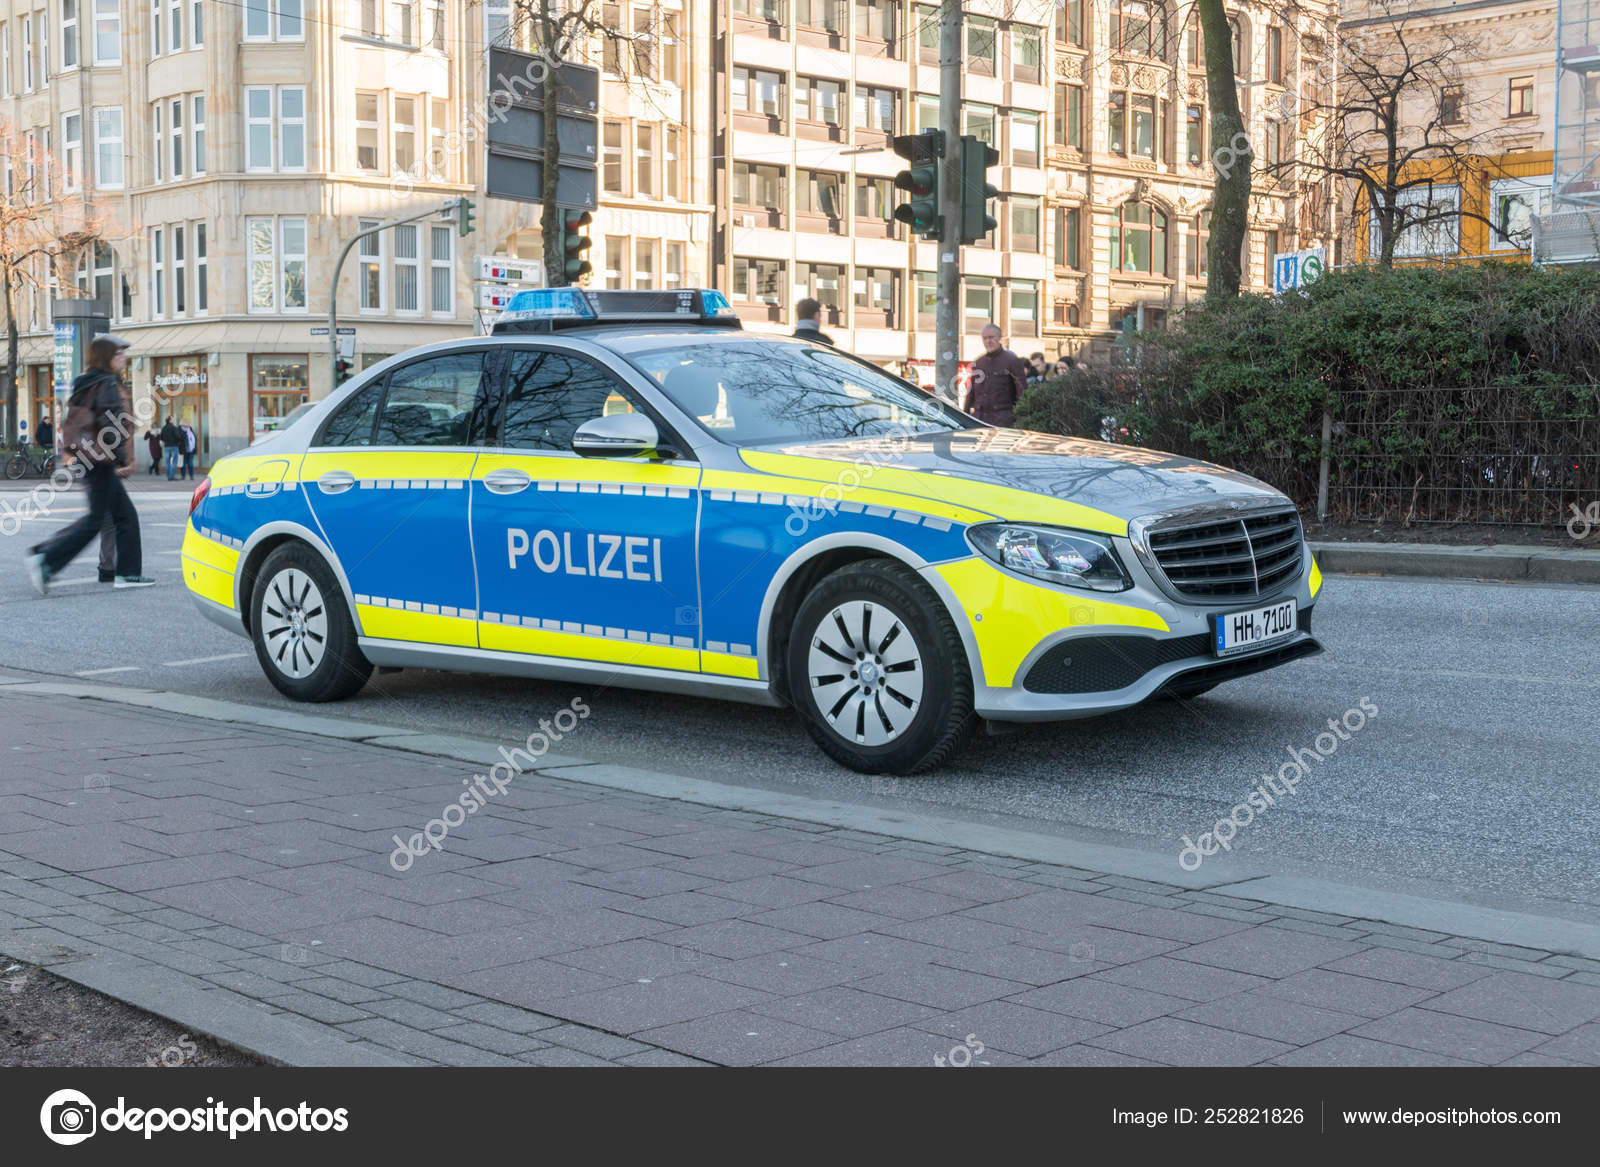 https://st4.depositphotos.com/12411398/25282/i/1600/depositphotos_252821826-stock-photo-german-polizei-police-car-mercedes.jpg